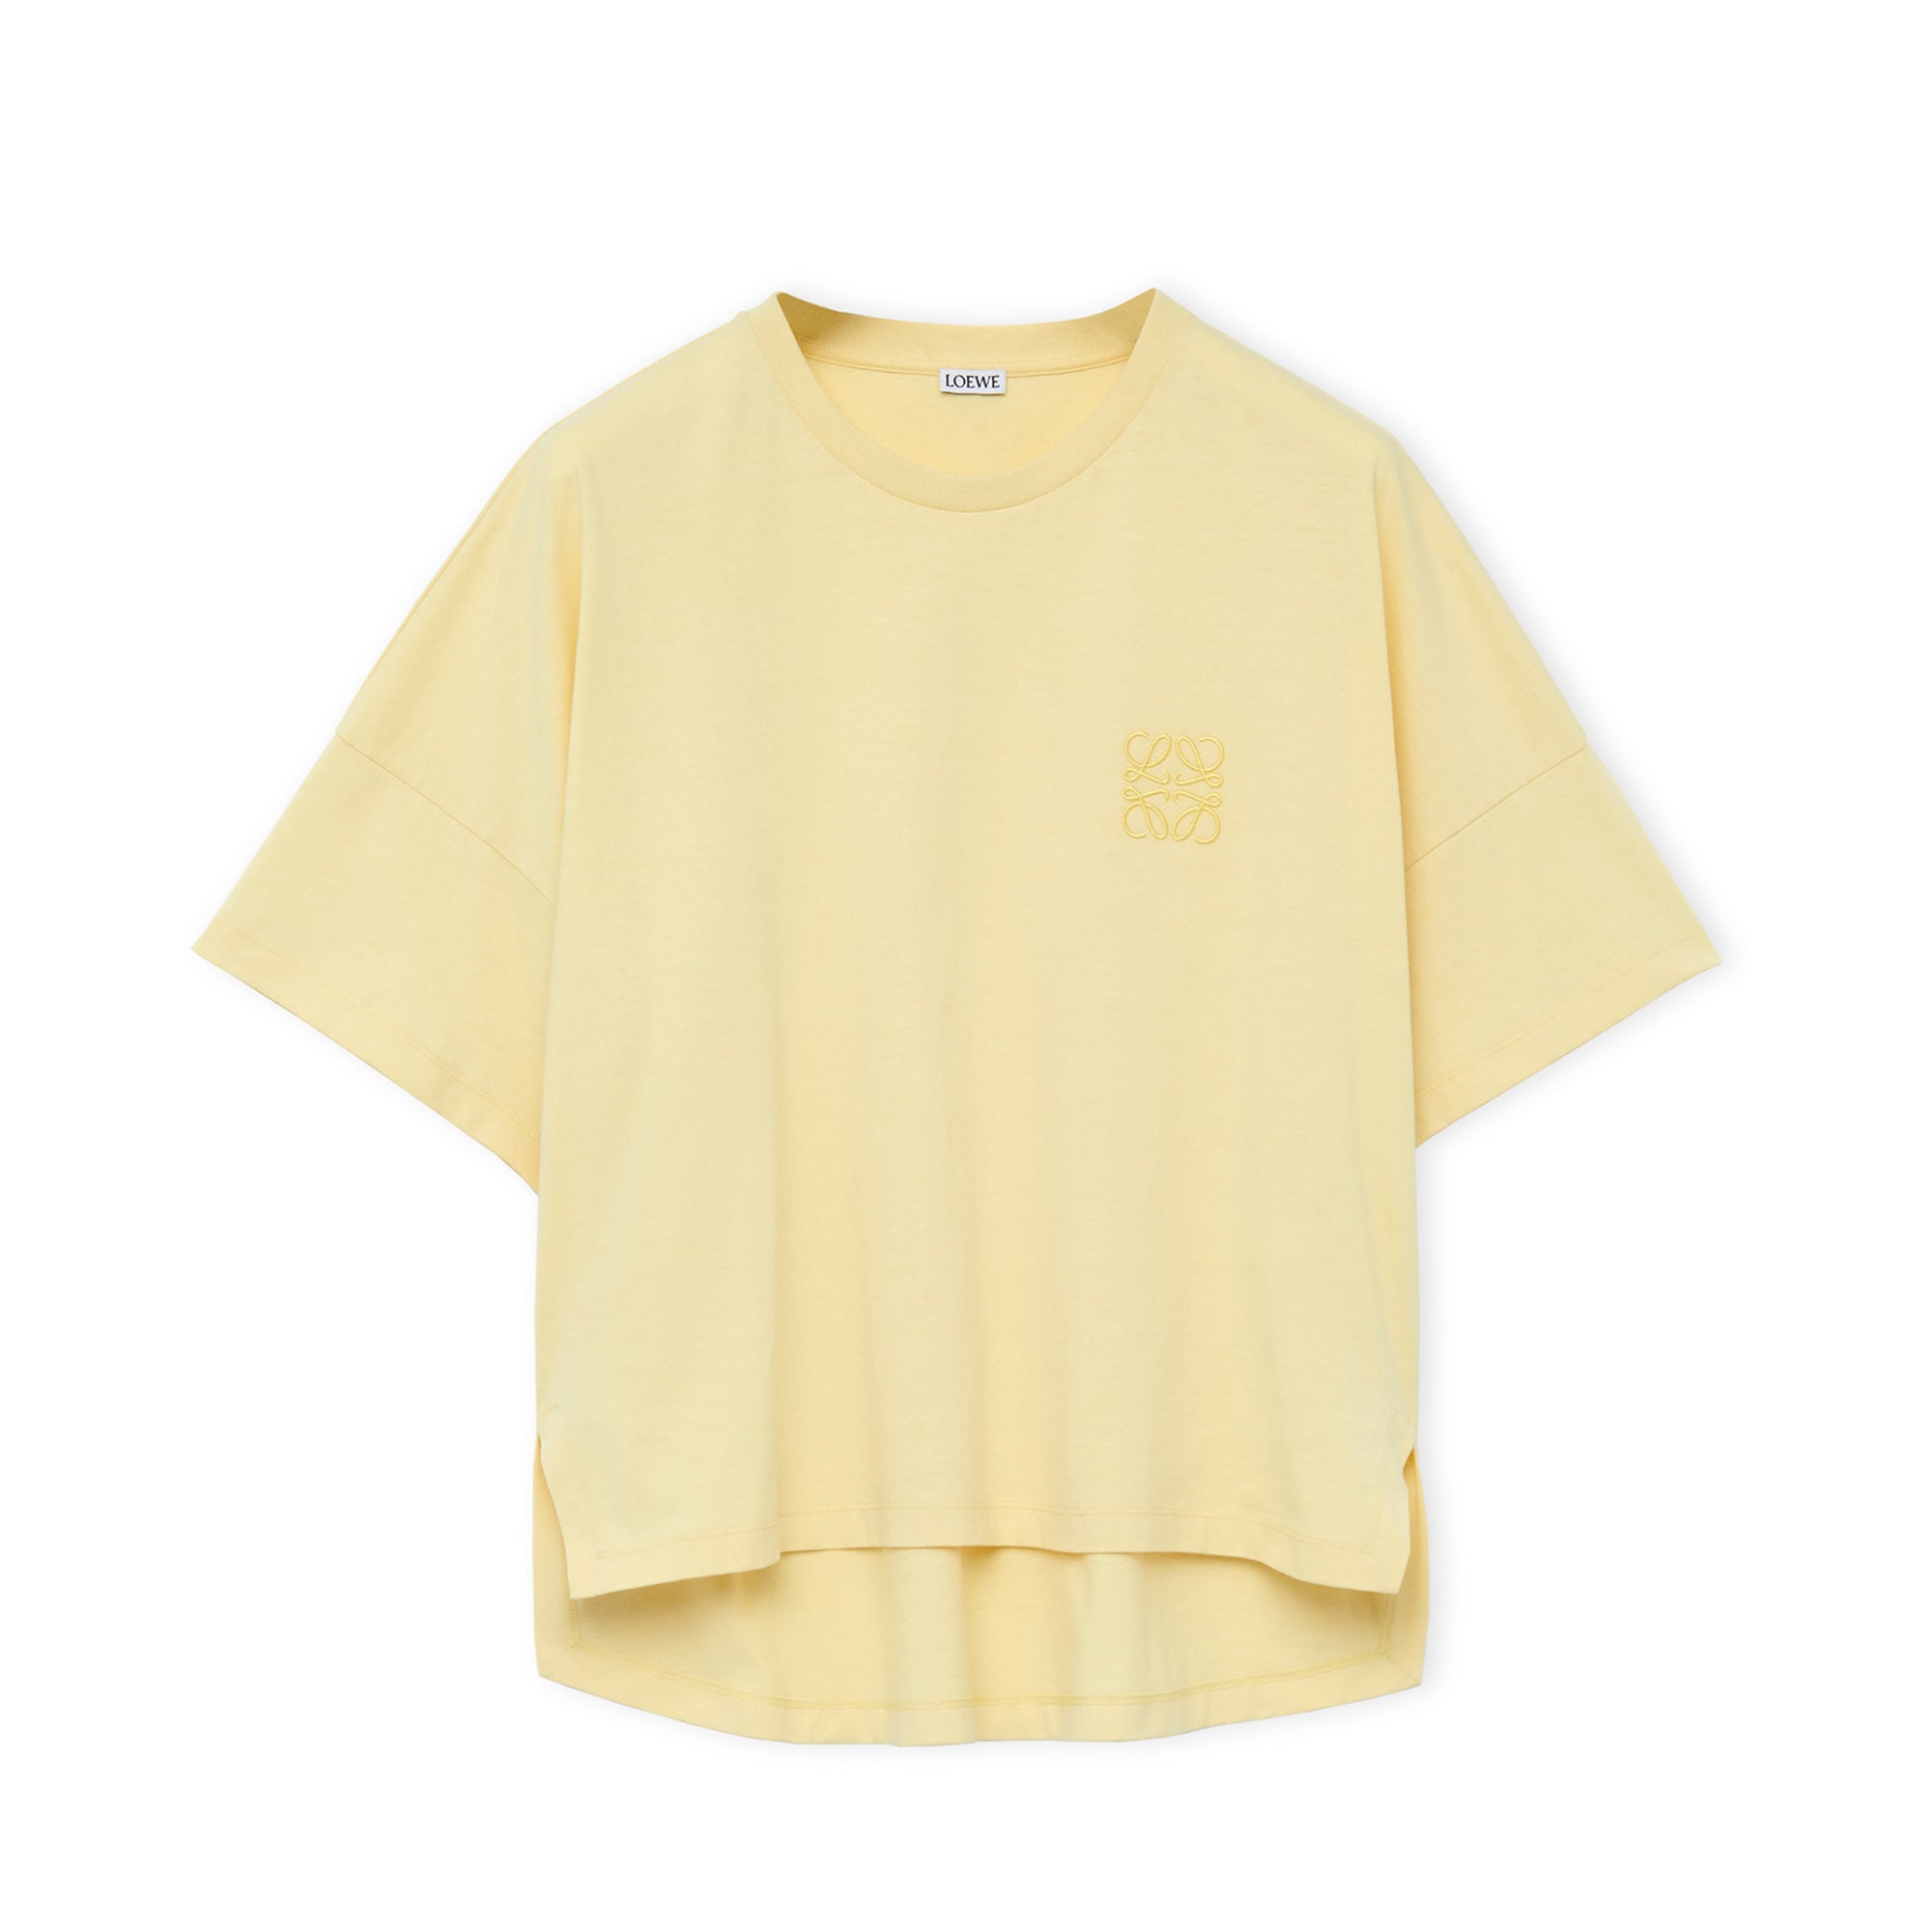 Loewe - Women’s Boxy Fit T-Shirt - (Light Lemon) view 1